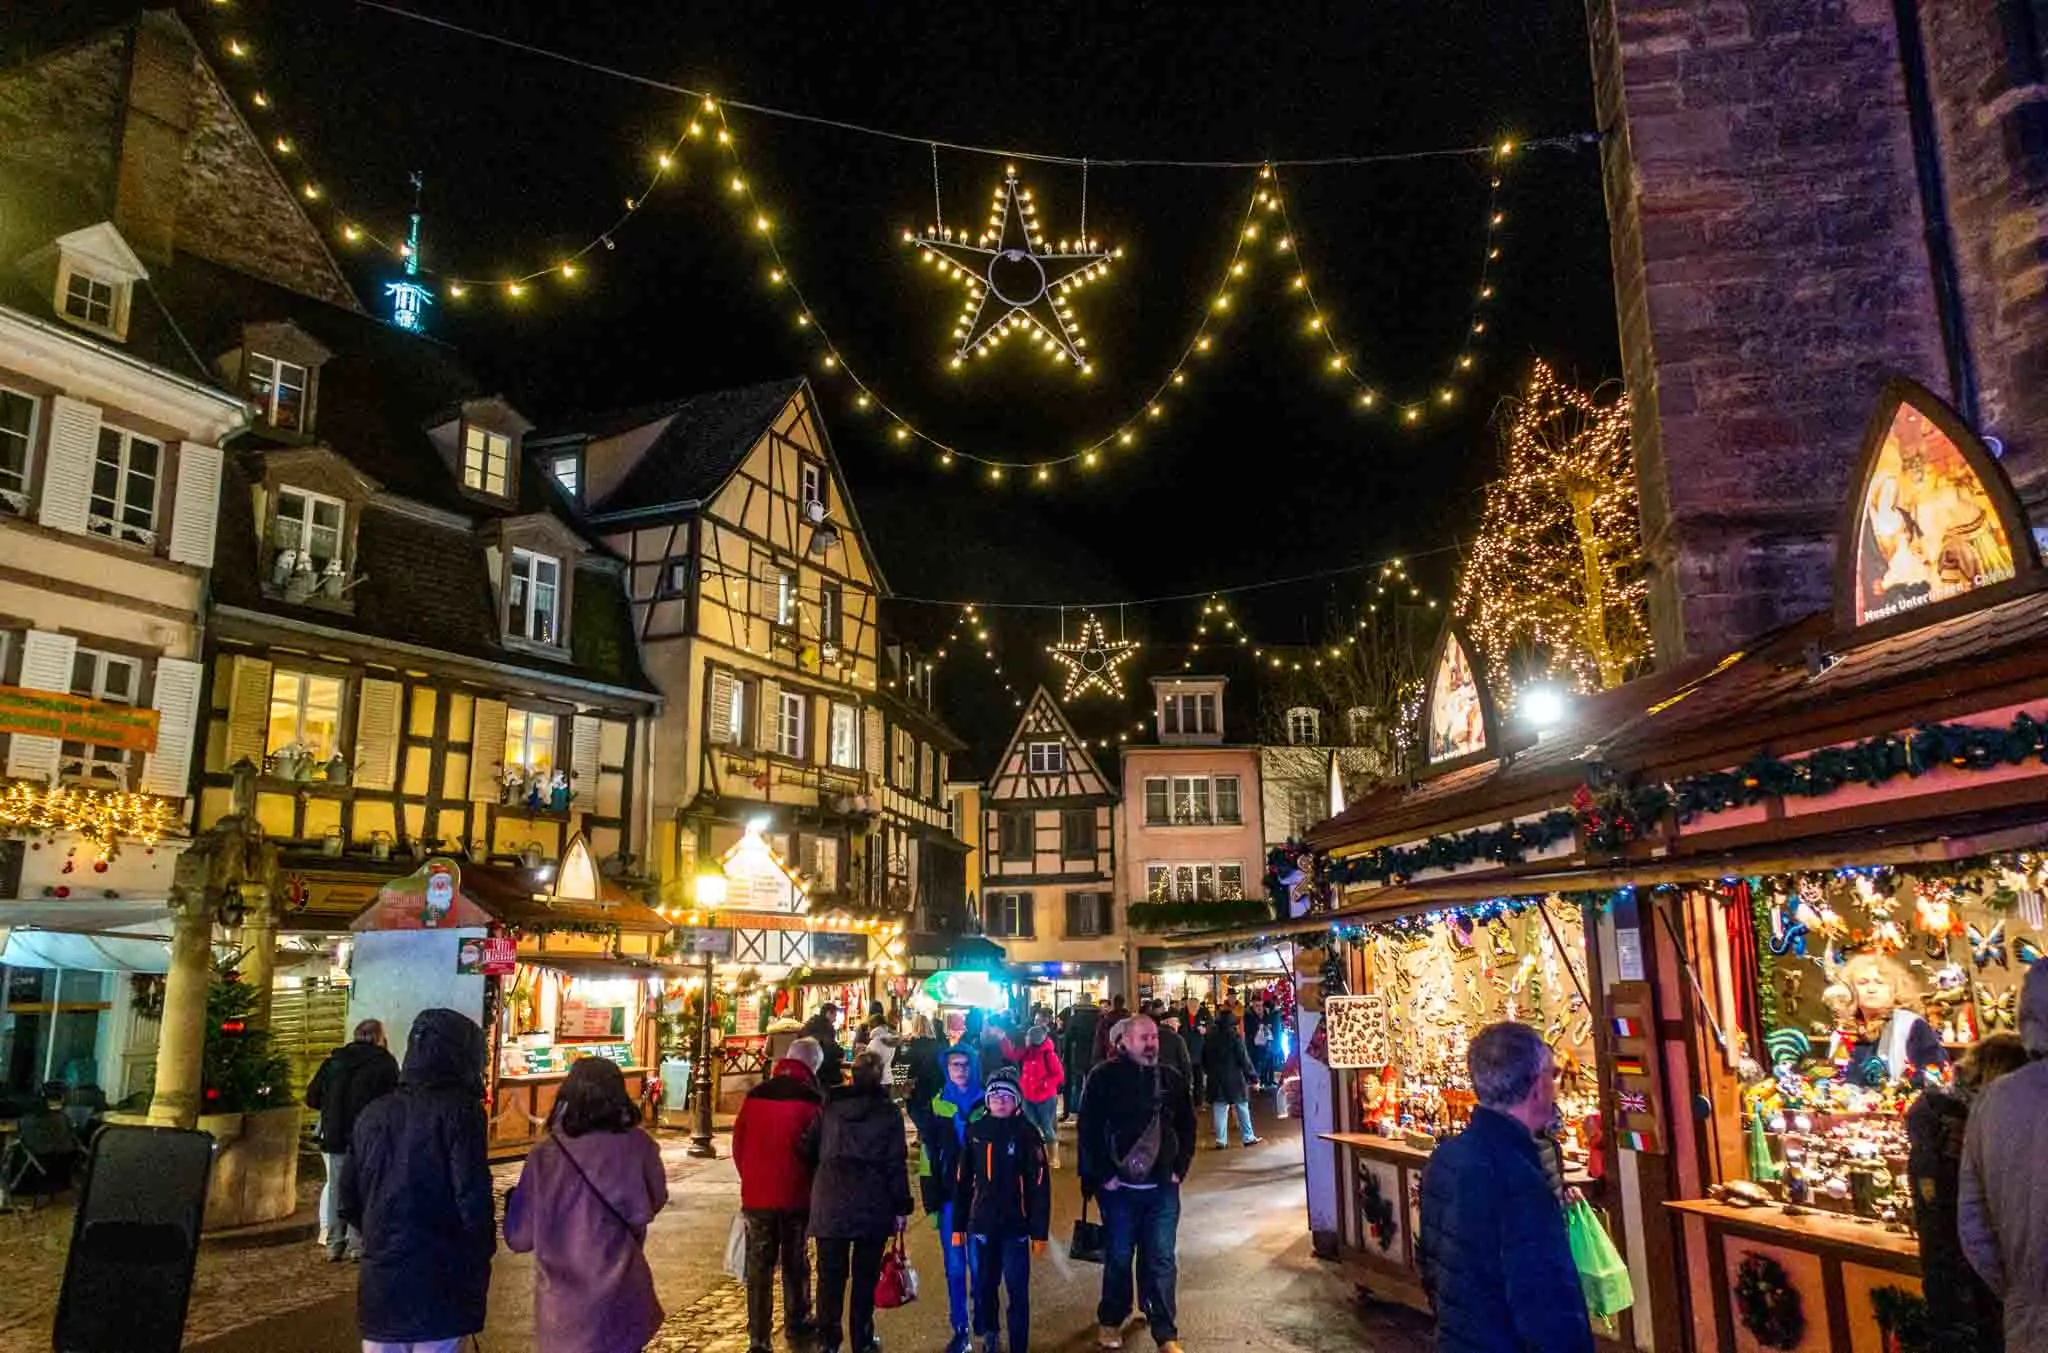 People shopping at market stalls under Christmas lights at night.